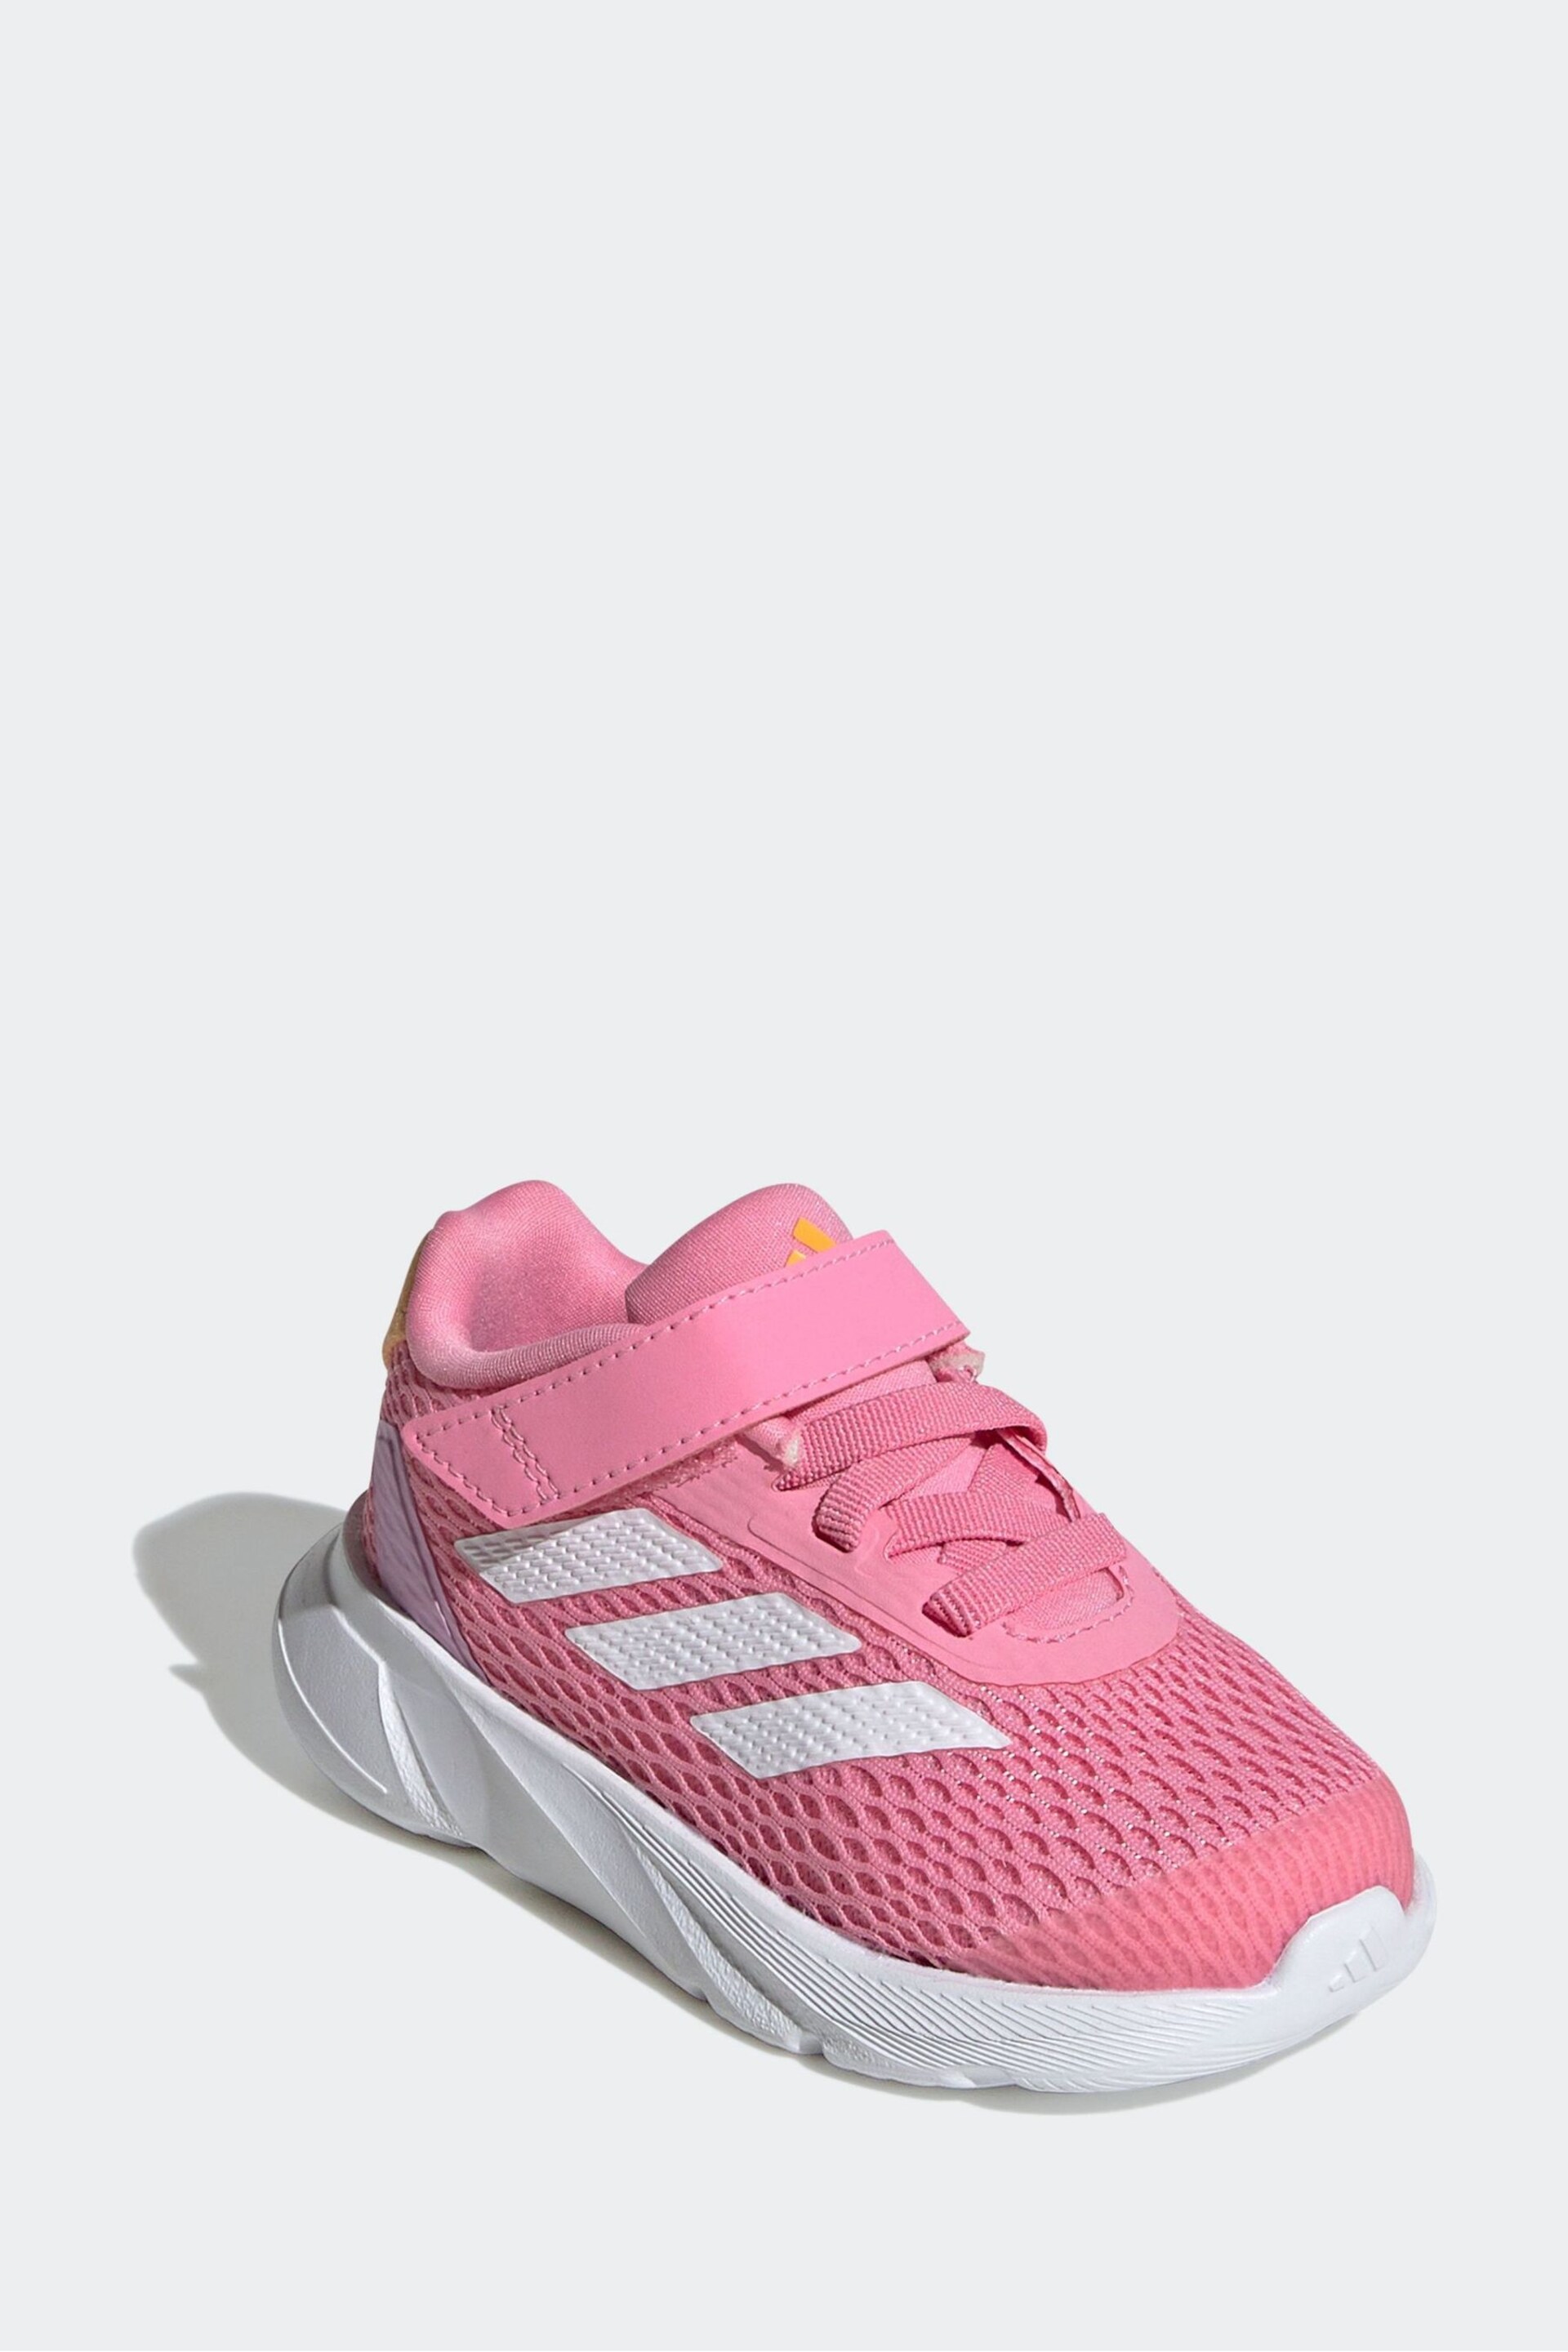 adidas Pink Duramo Trainers - Image 4 of 8